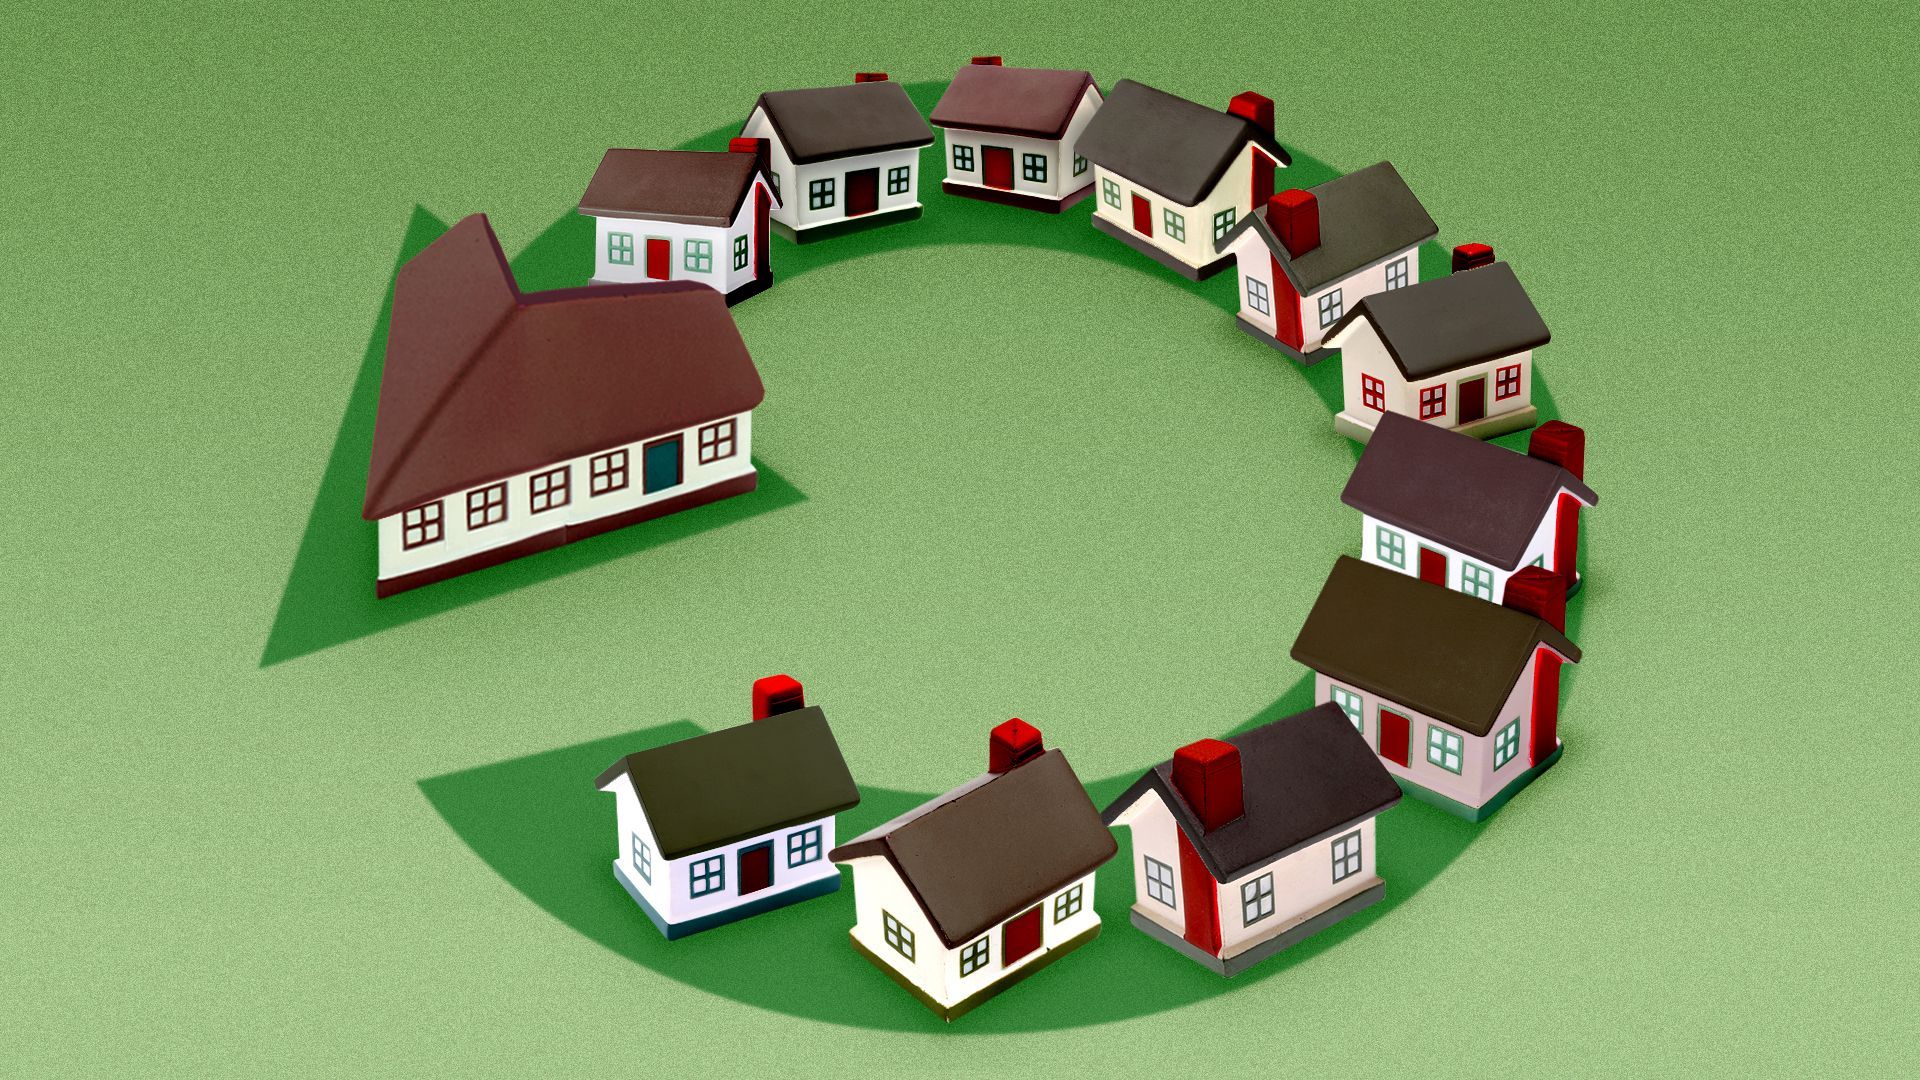 Illustration of a line of suburban houses creating a restart symbol shape